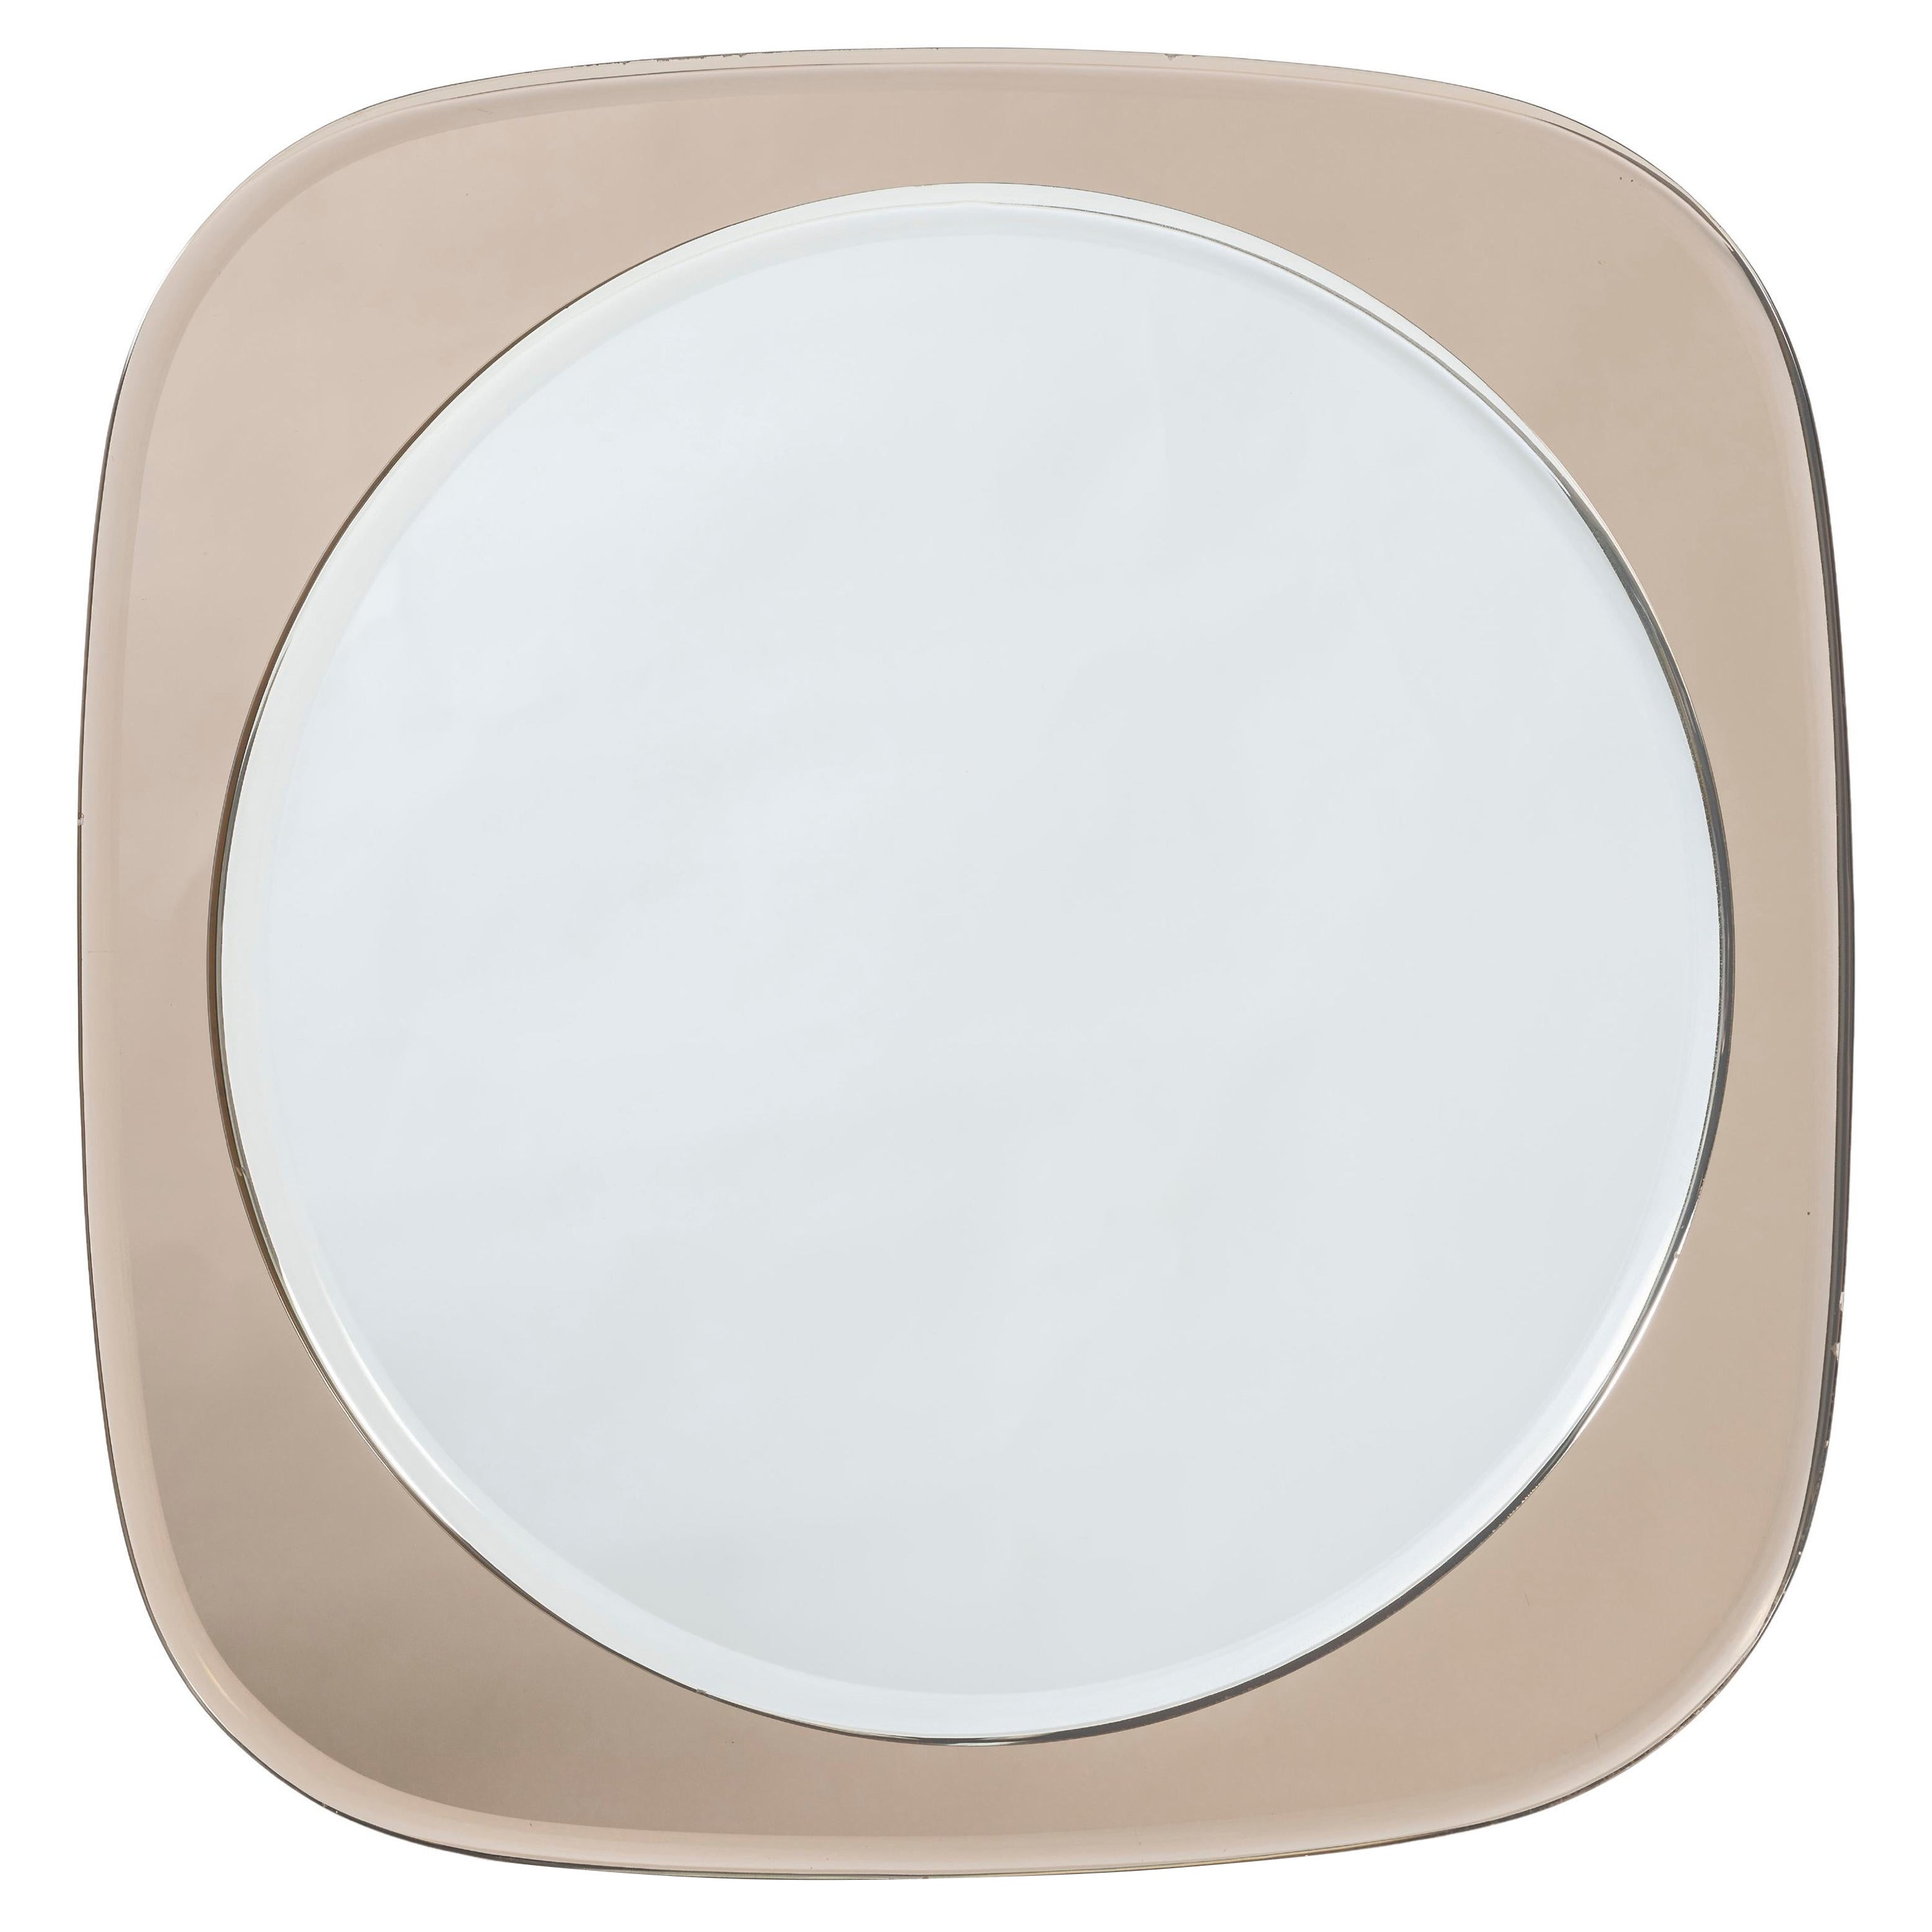 Italian 1960s Circular Mirror with Square Smoky-Brown Glass Mirror Frame